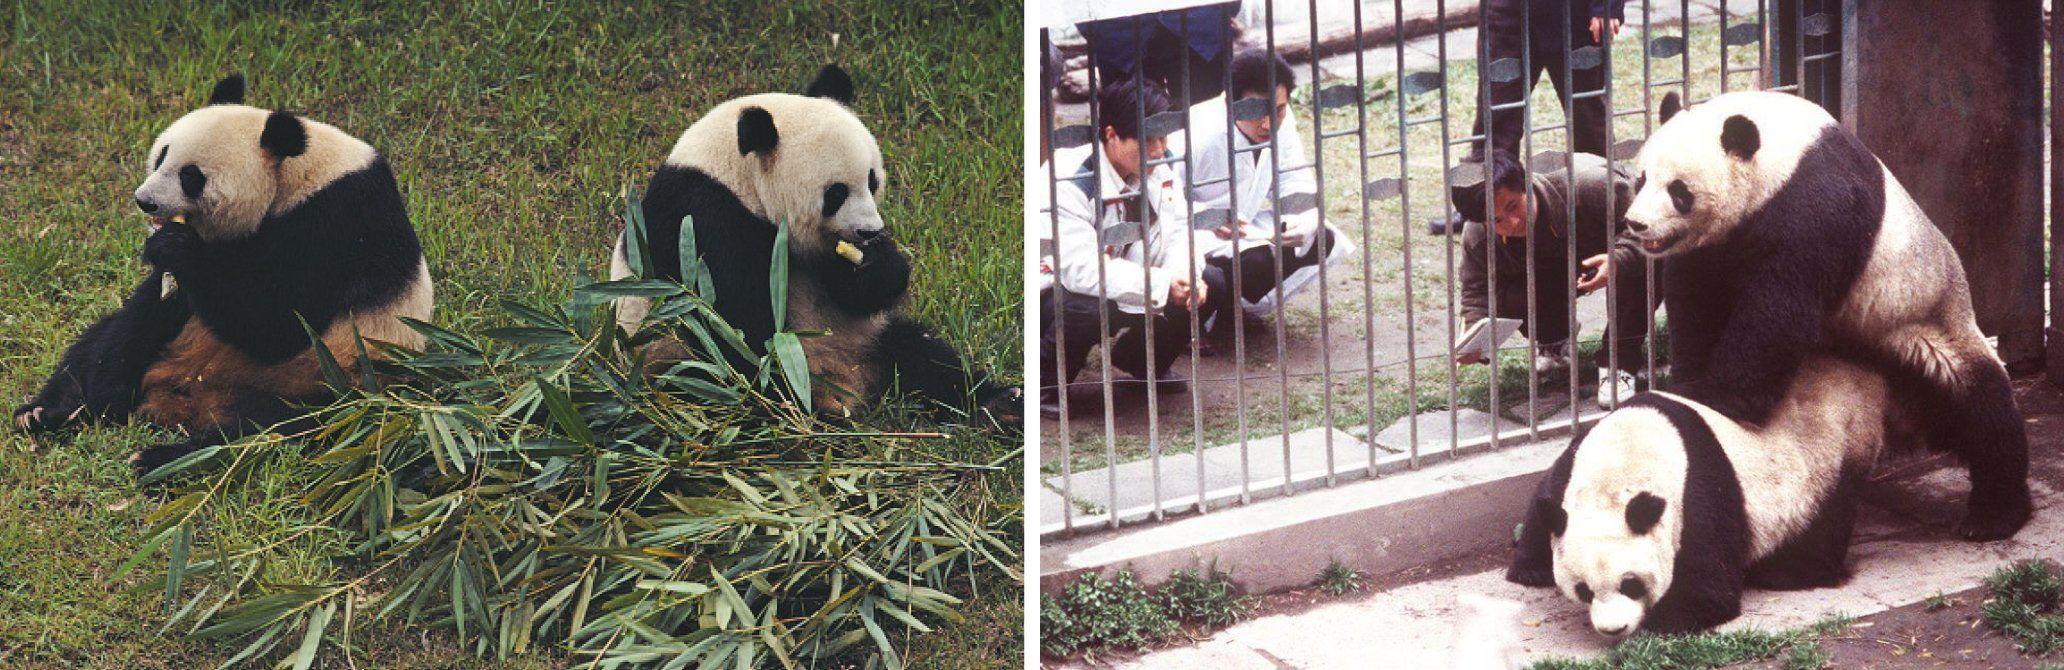 Sperm harvesting panda